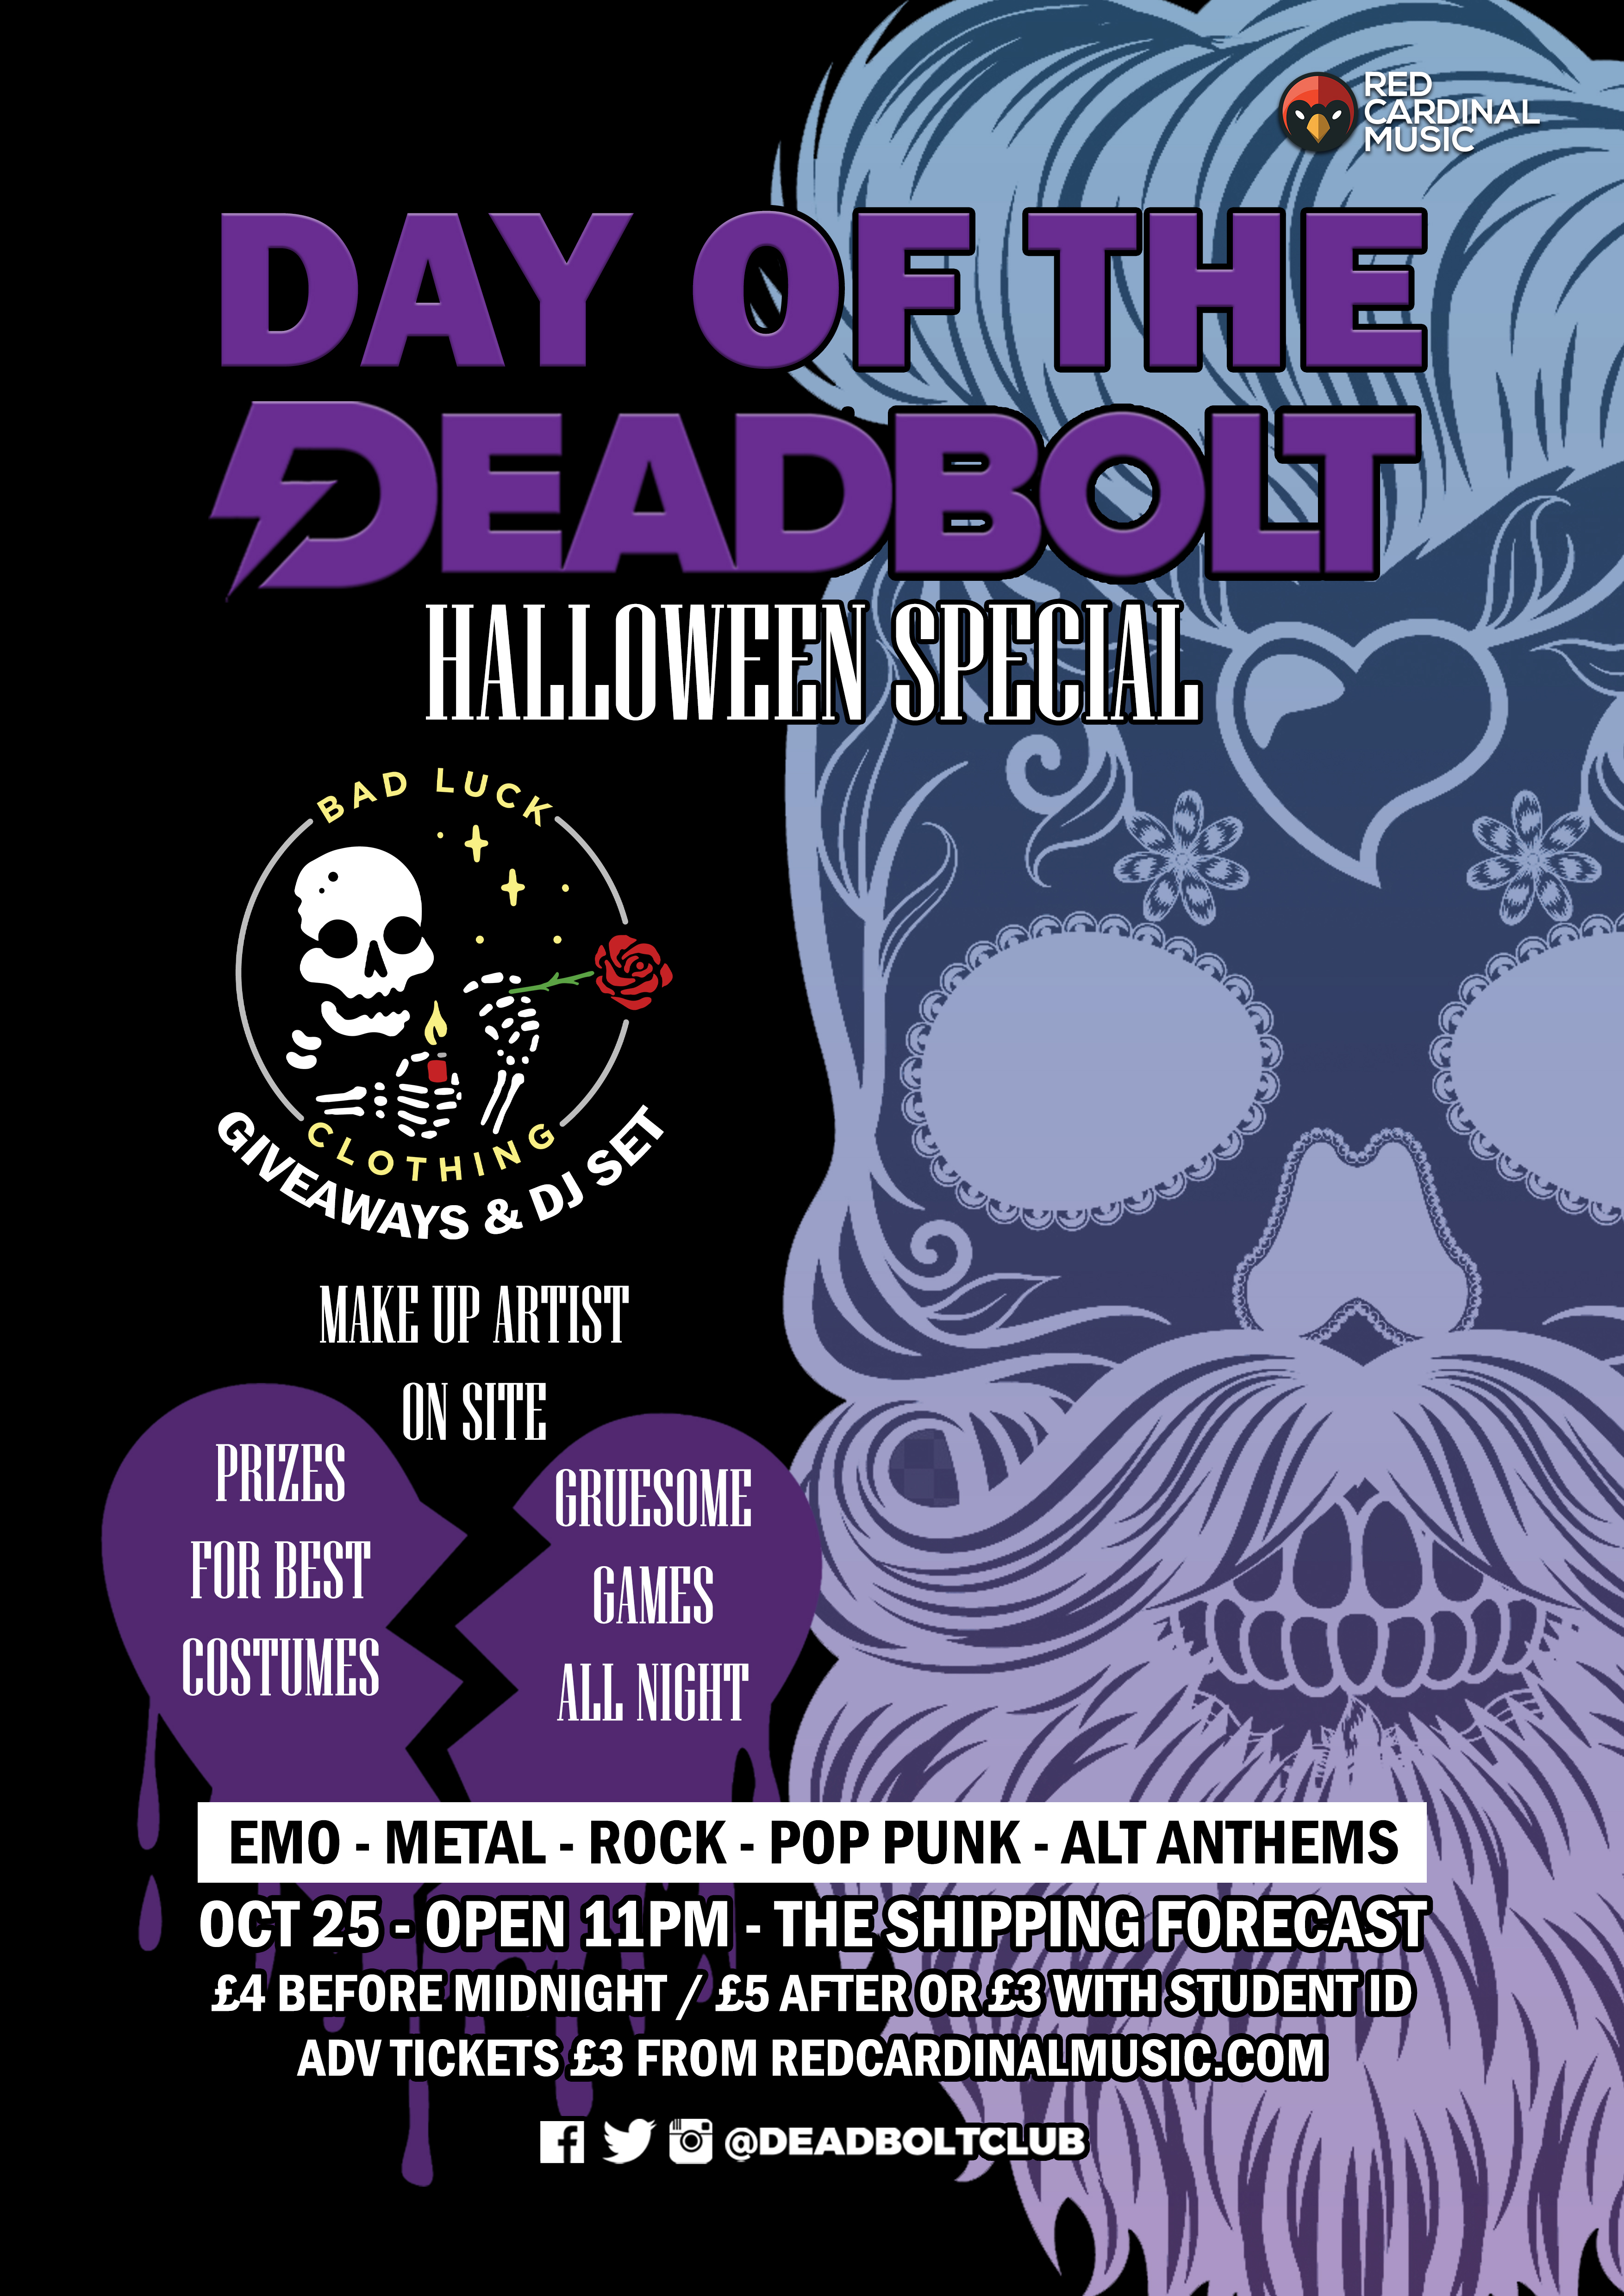 Deadbolt Liverpool Halloween - Day of The Deadbolt - 25 Oct 19 - The Shipping Forecast - Poster - Red Cardinal Music - Alternative